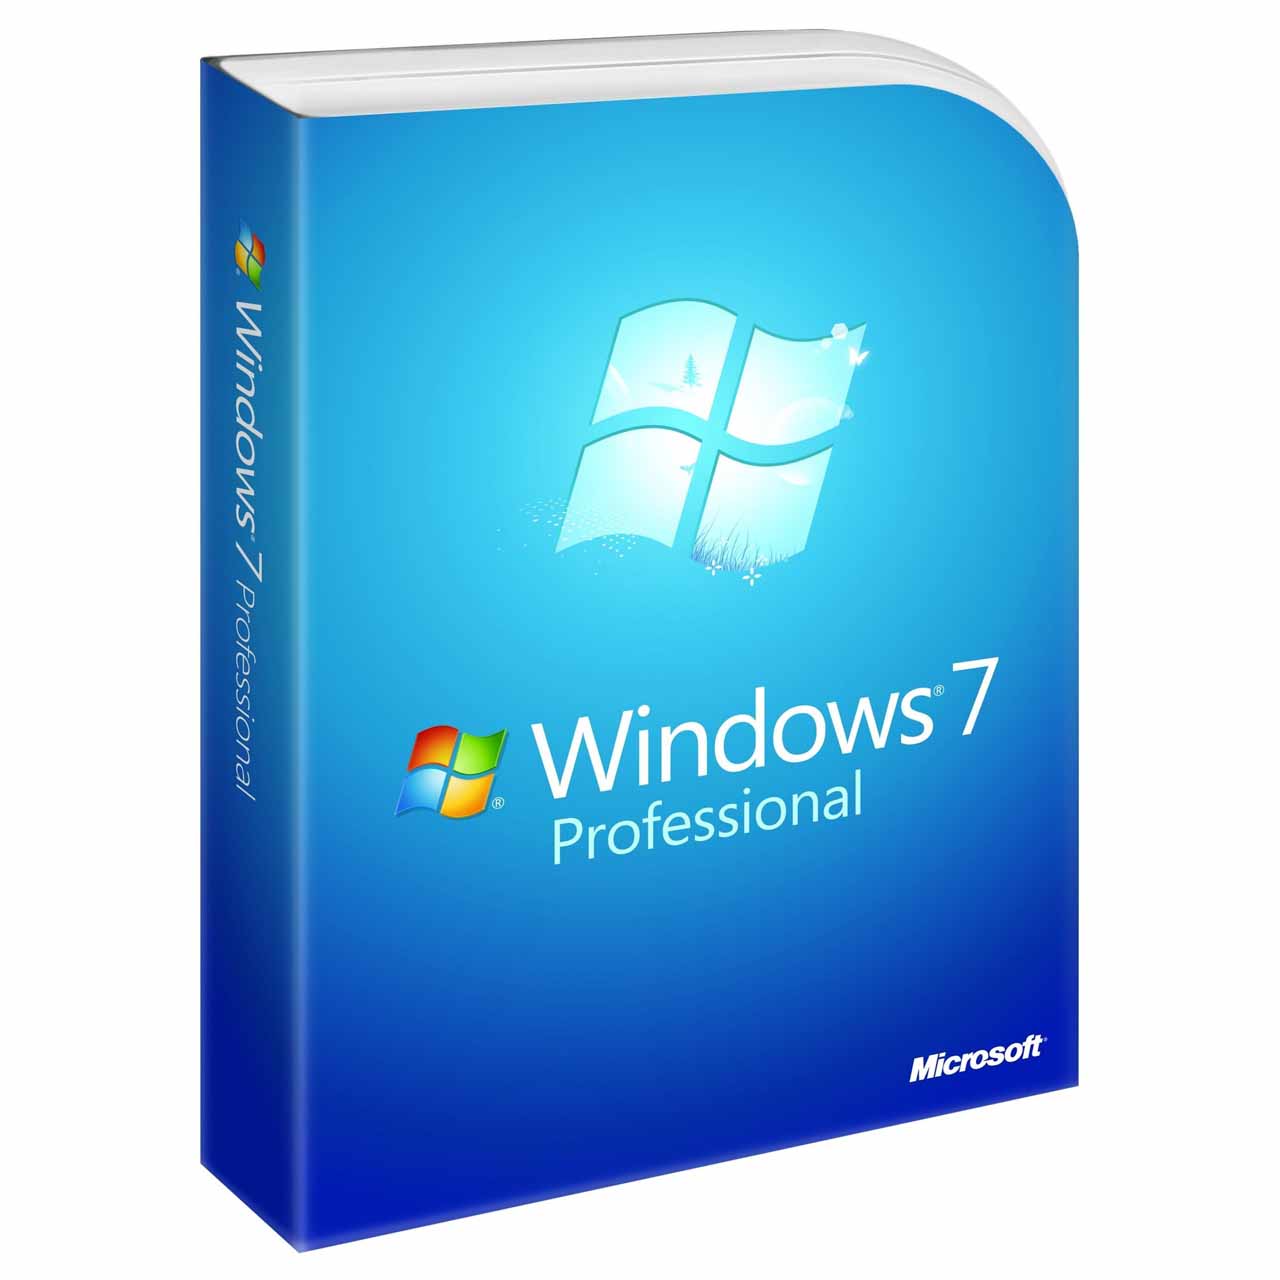 ویندوز 7 نسخه Professional 64-bit - لایسنس OEM بهمراه آفیس 2010 پرفشنال پلاس